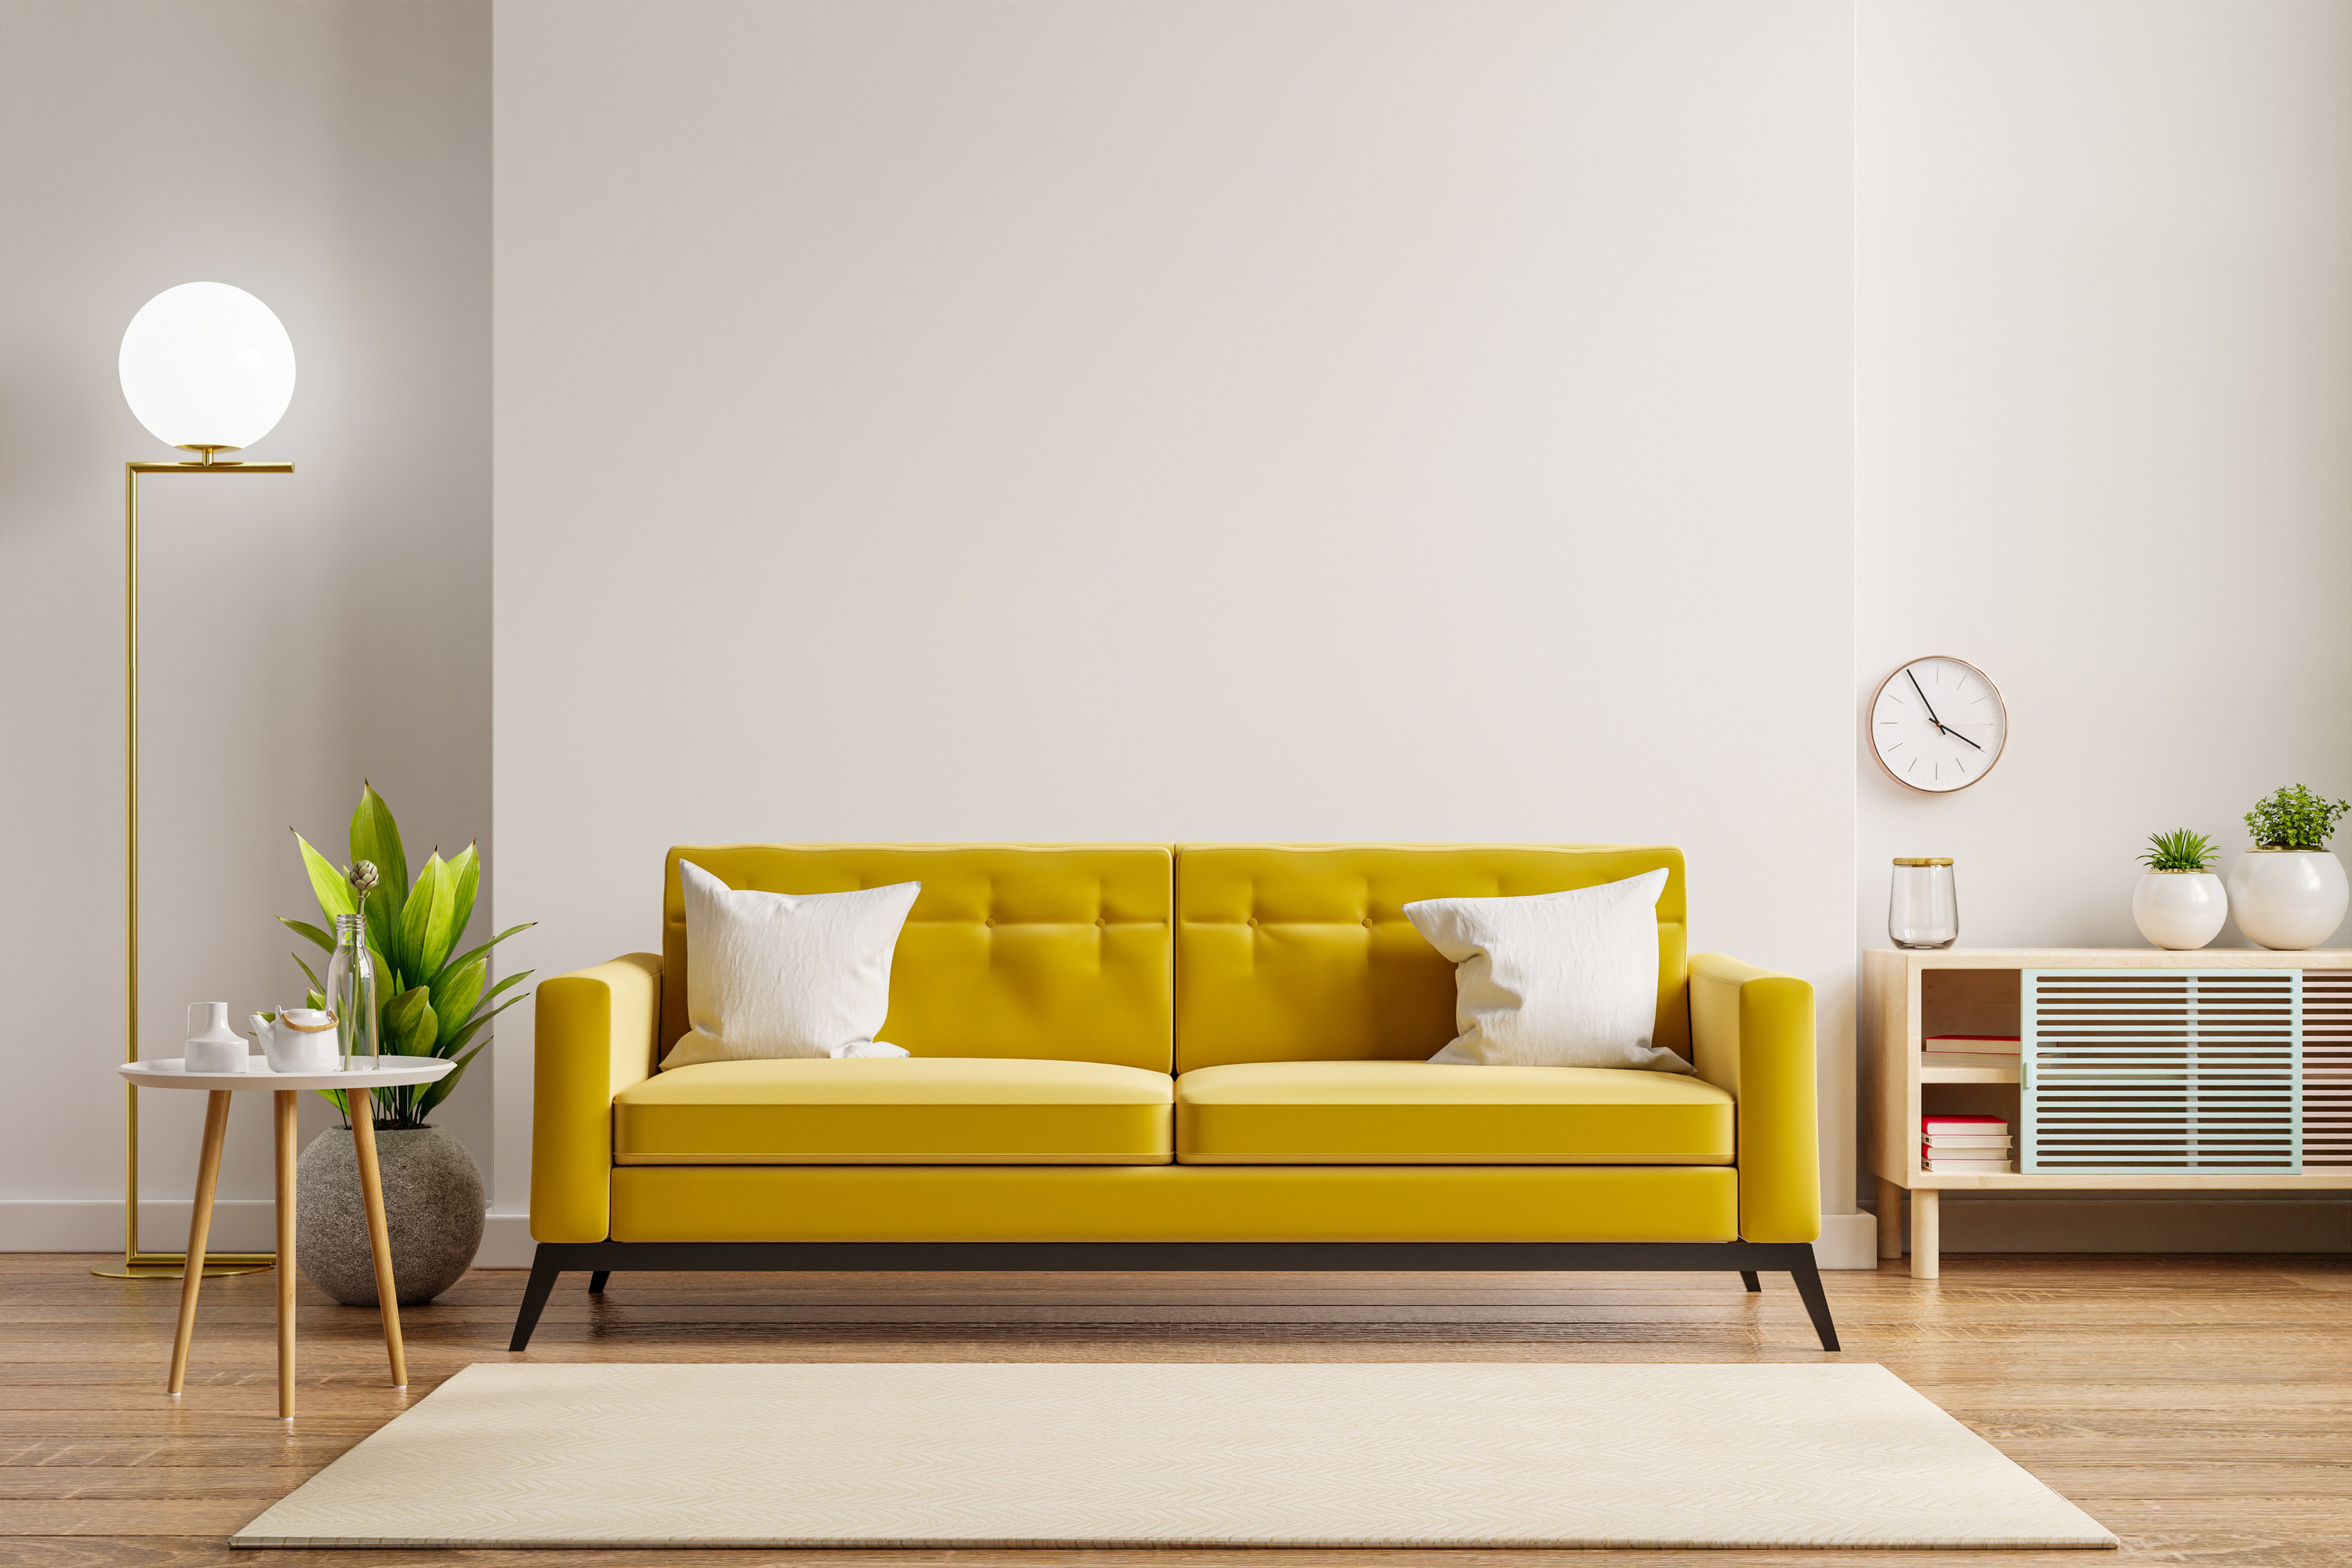 a minimalistic living room